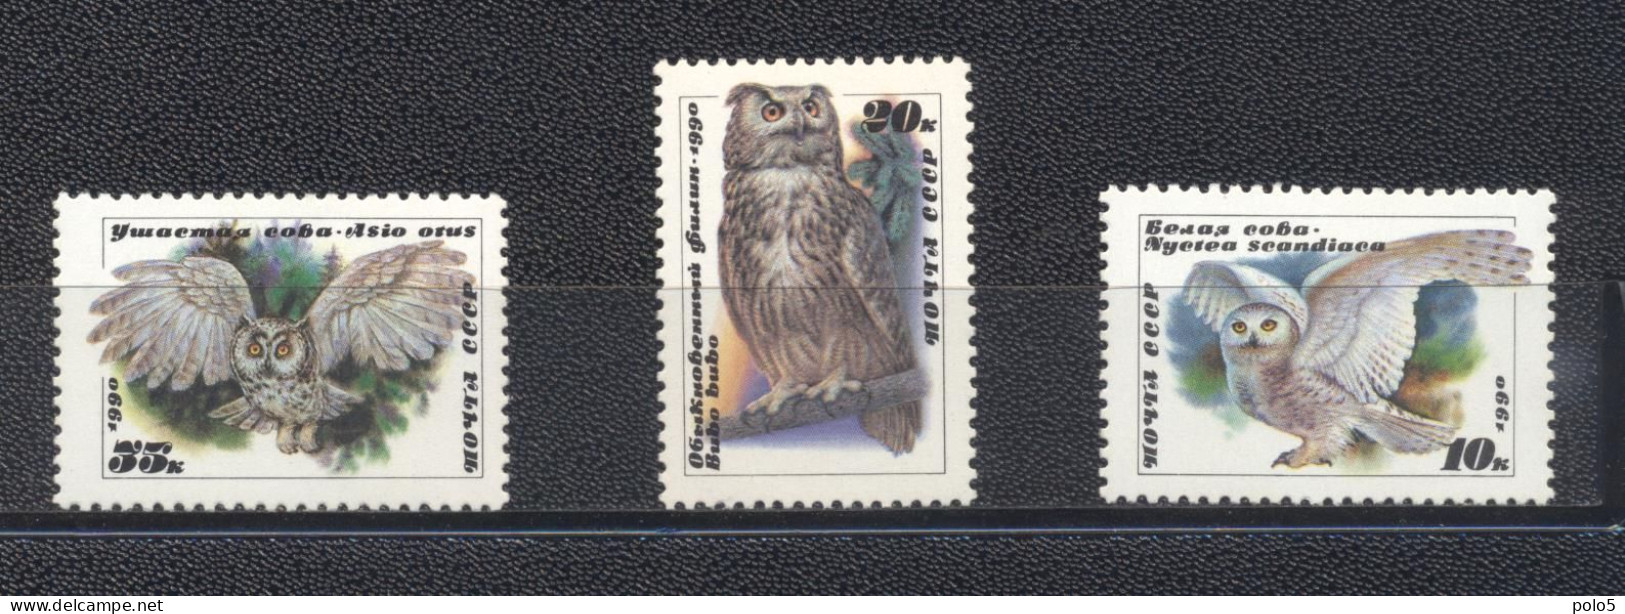 URSS 1990-Owls Set (3v) - Ongebruikt